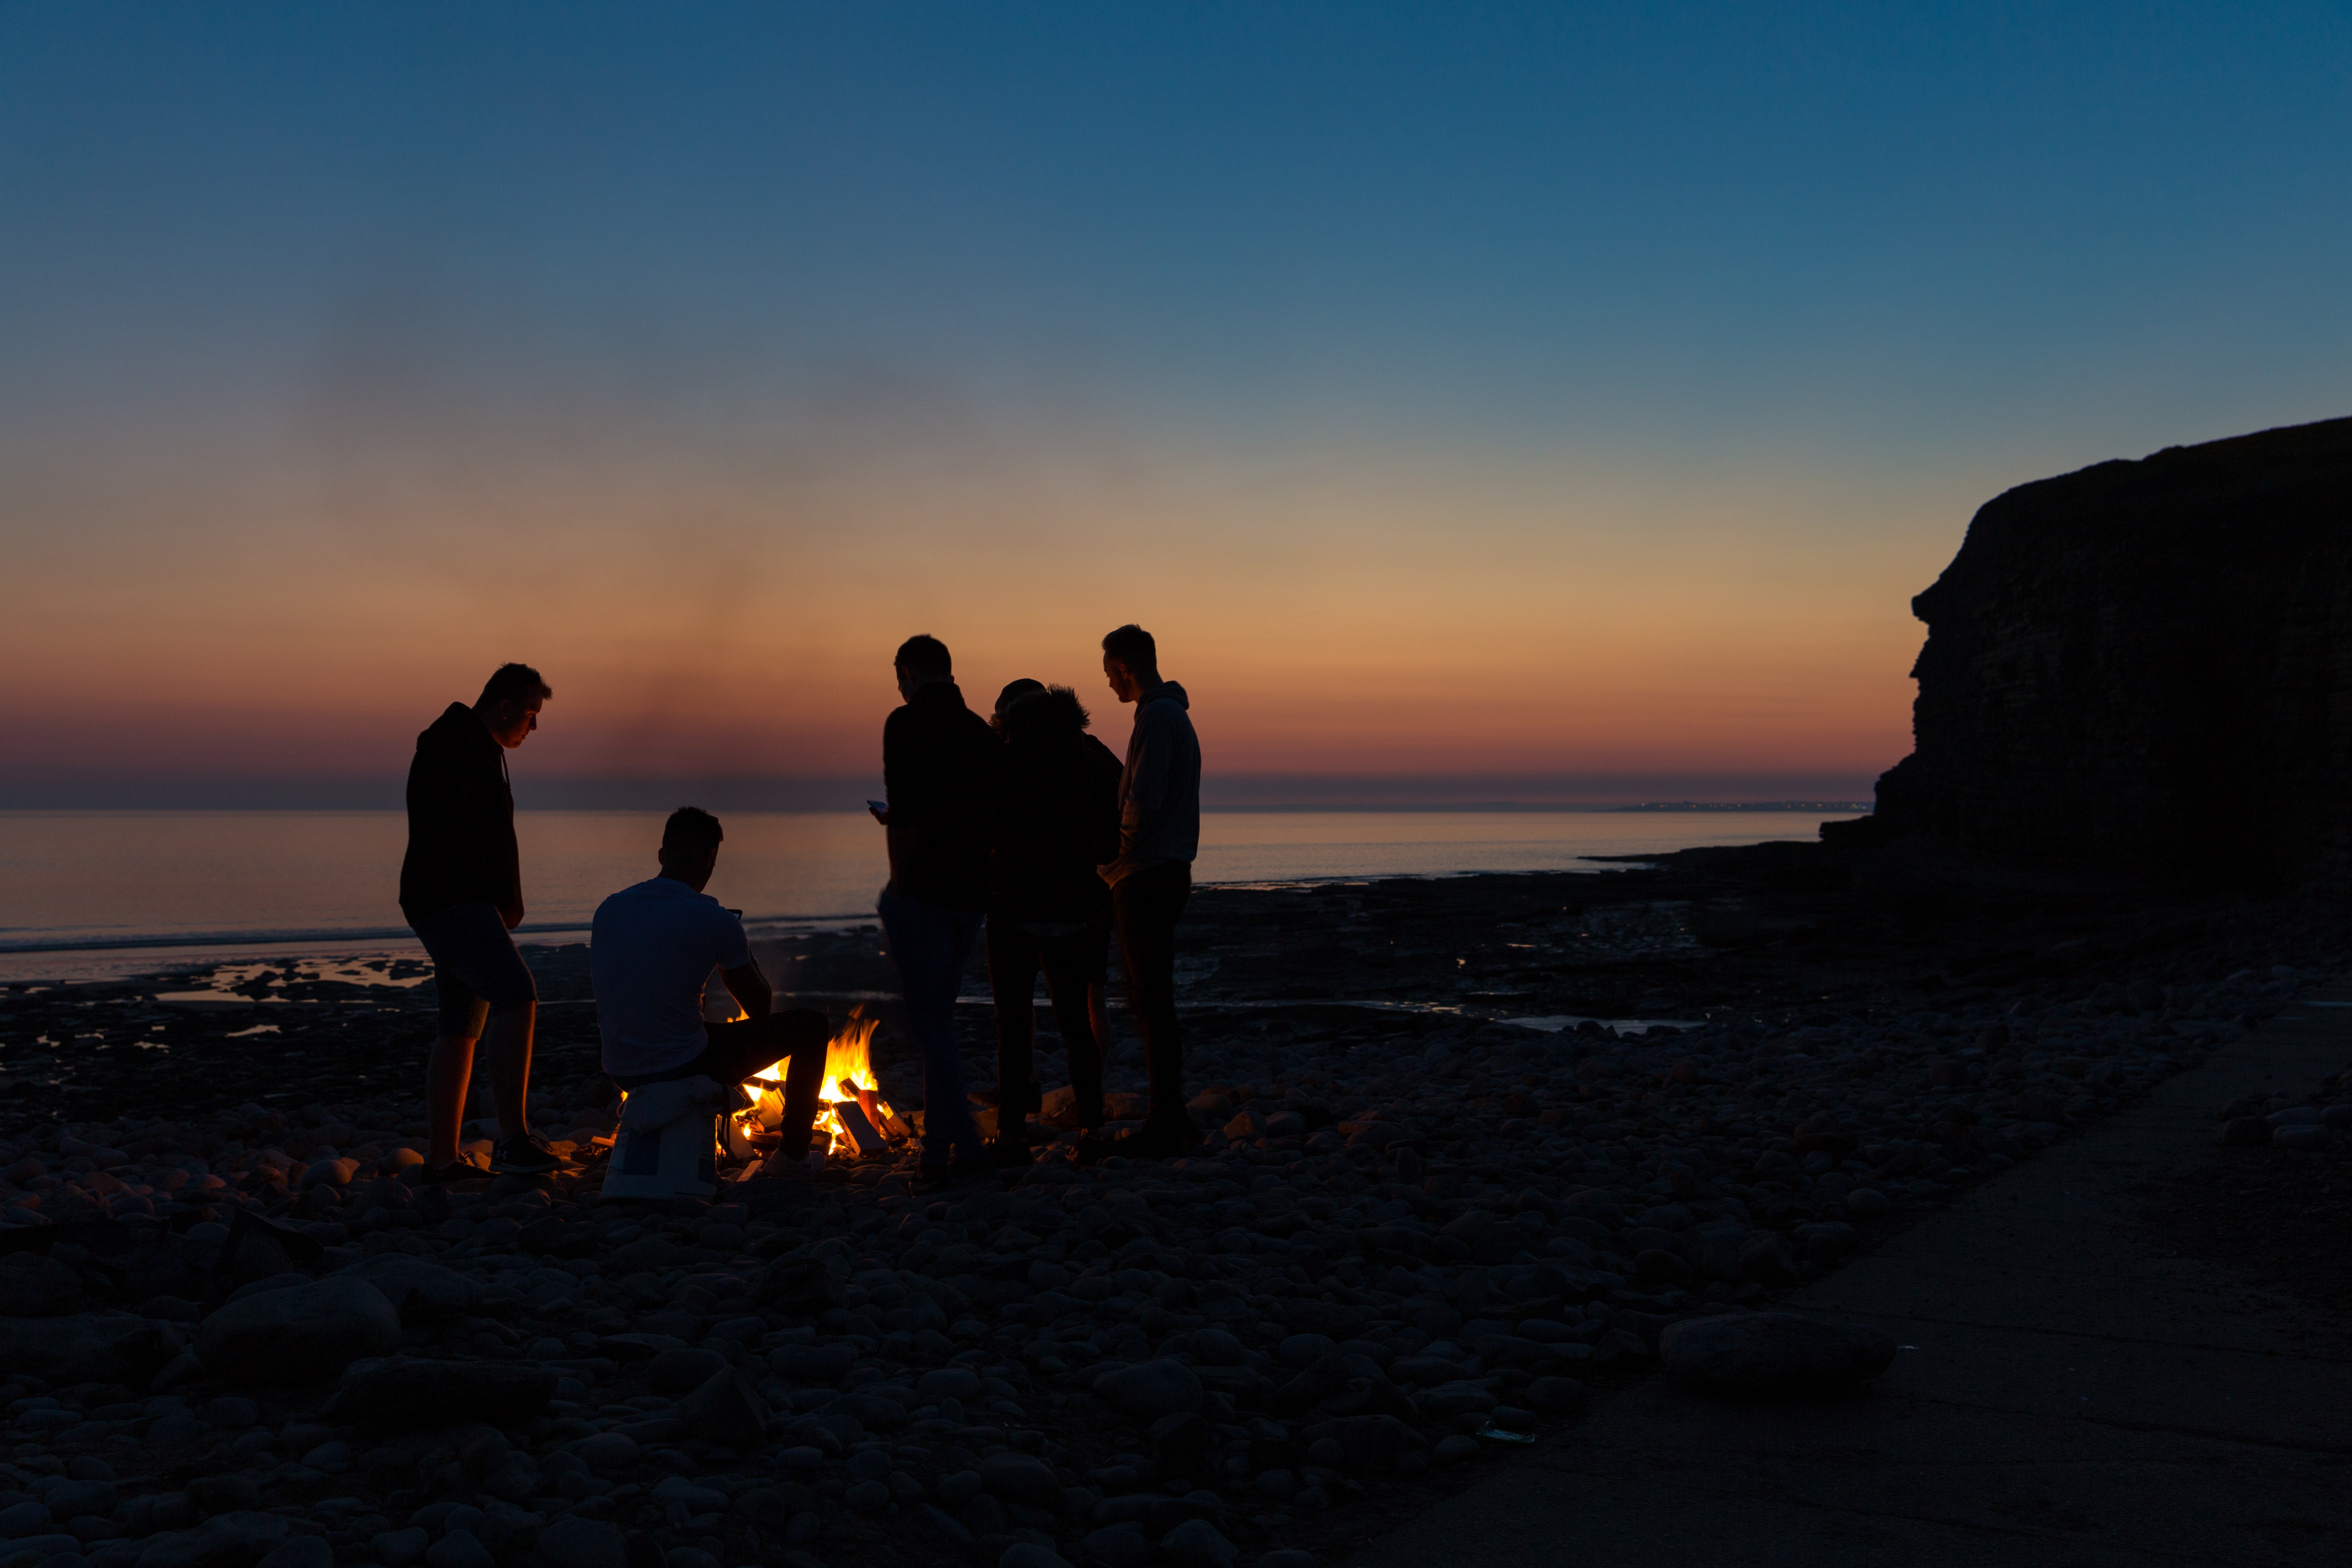 desktop Images bonfire, beach, dark, silhouettes, relaxation, rest, camping, campsite